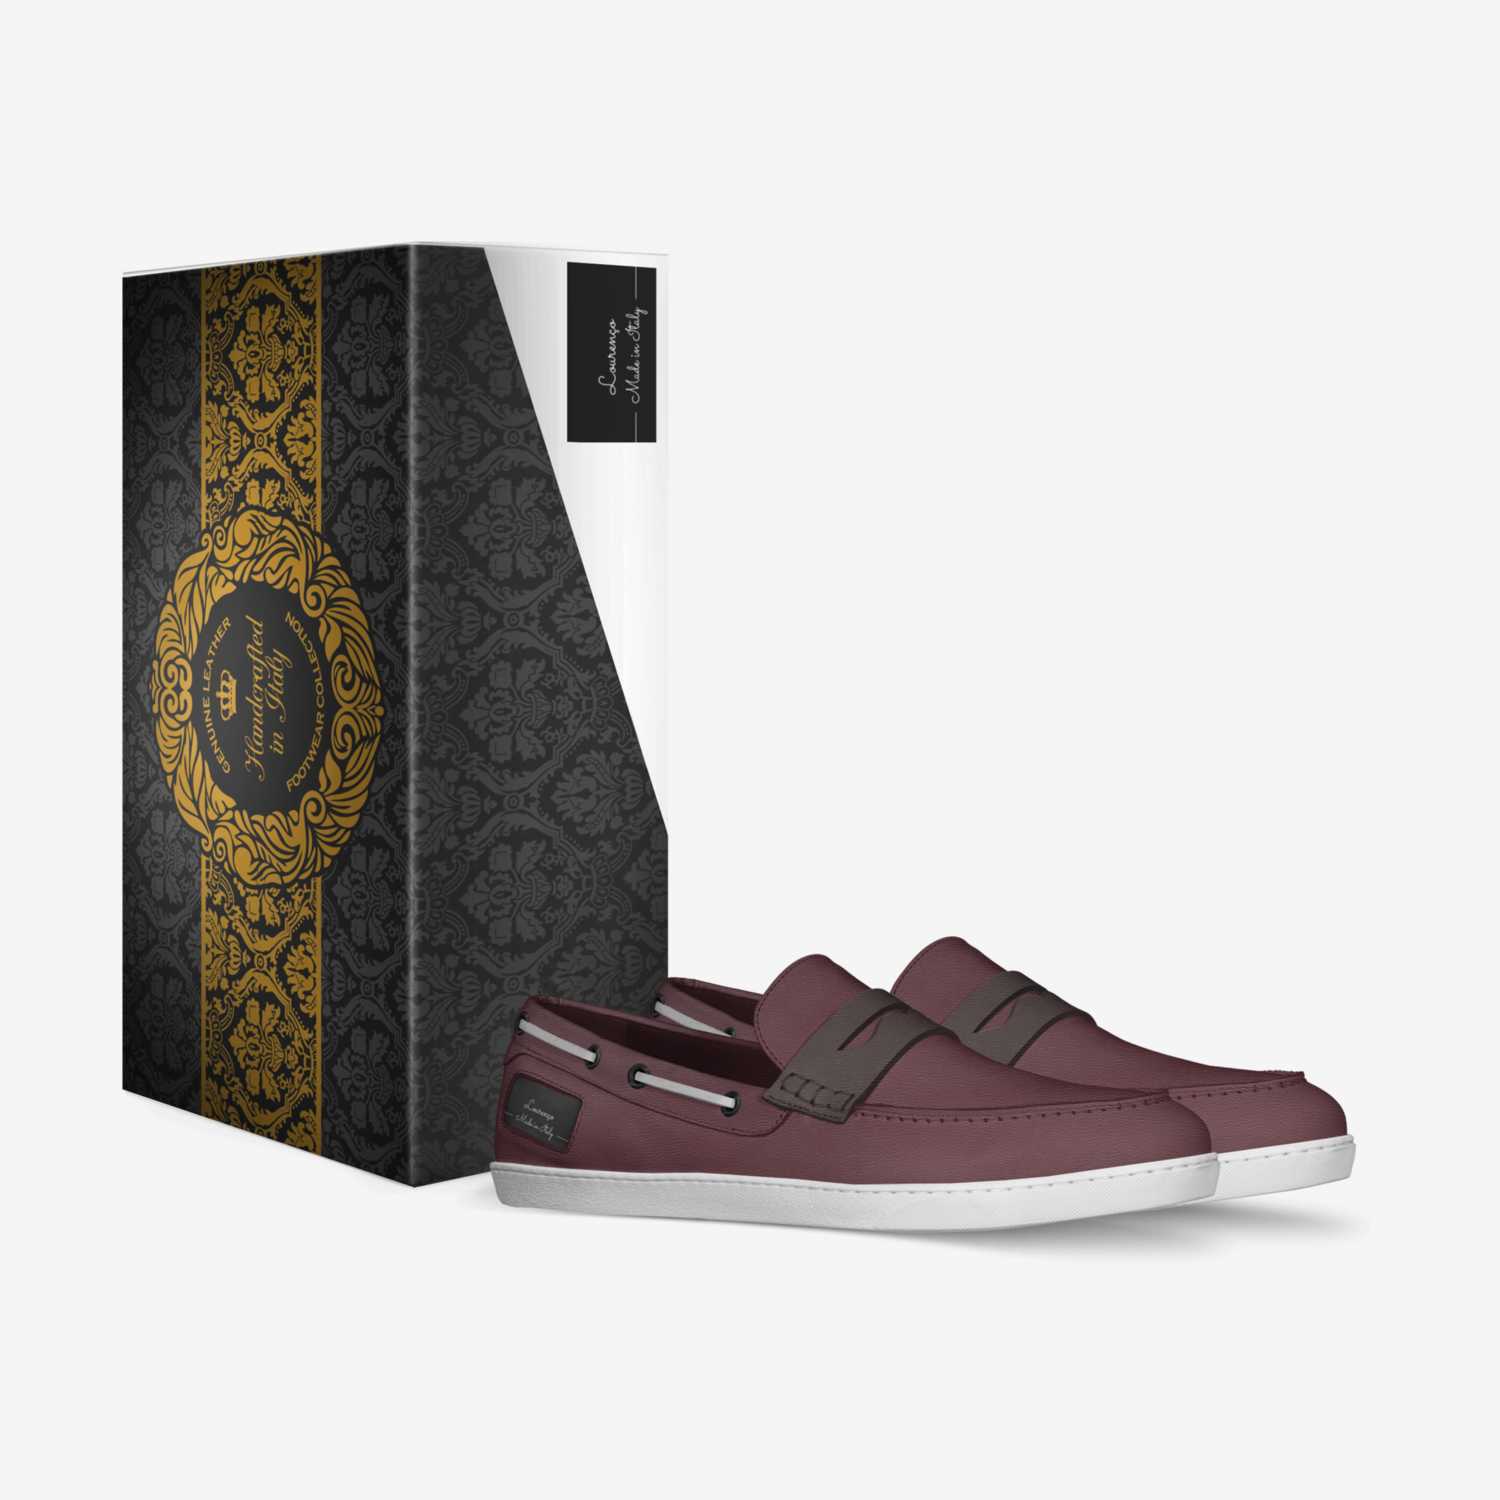 Lourenço  custom made in Italy shoes by Tomás Cardoso | Box view